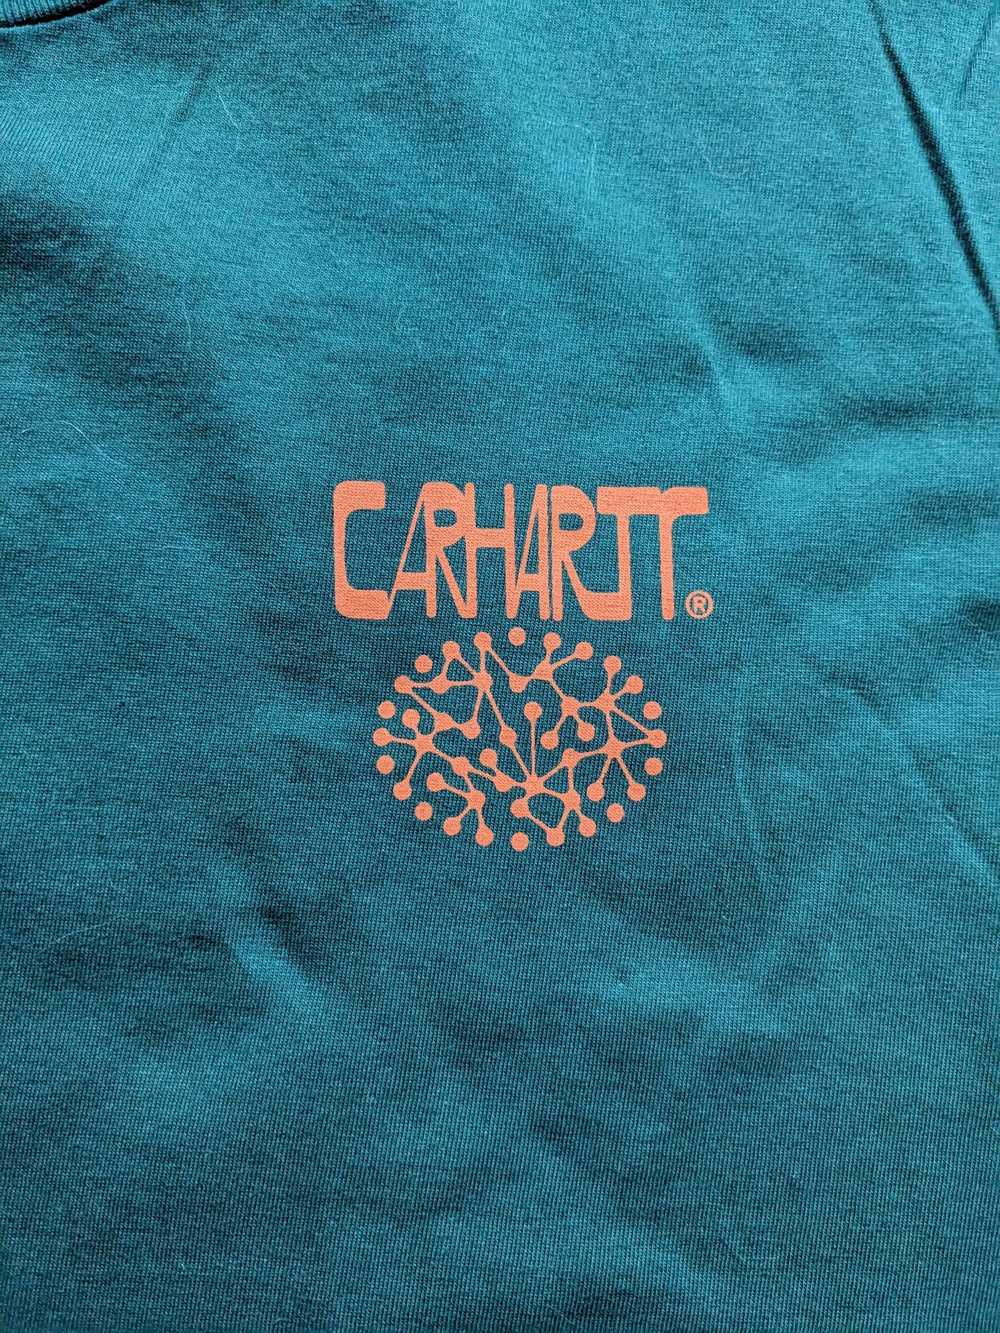 Carhartt Wip Carhartt WIP Cybernetics - image 3